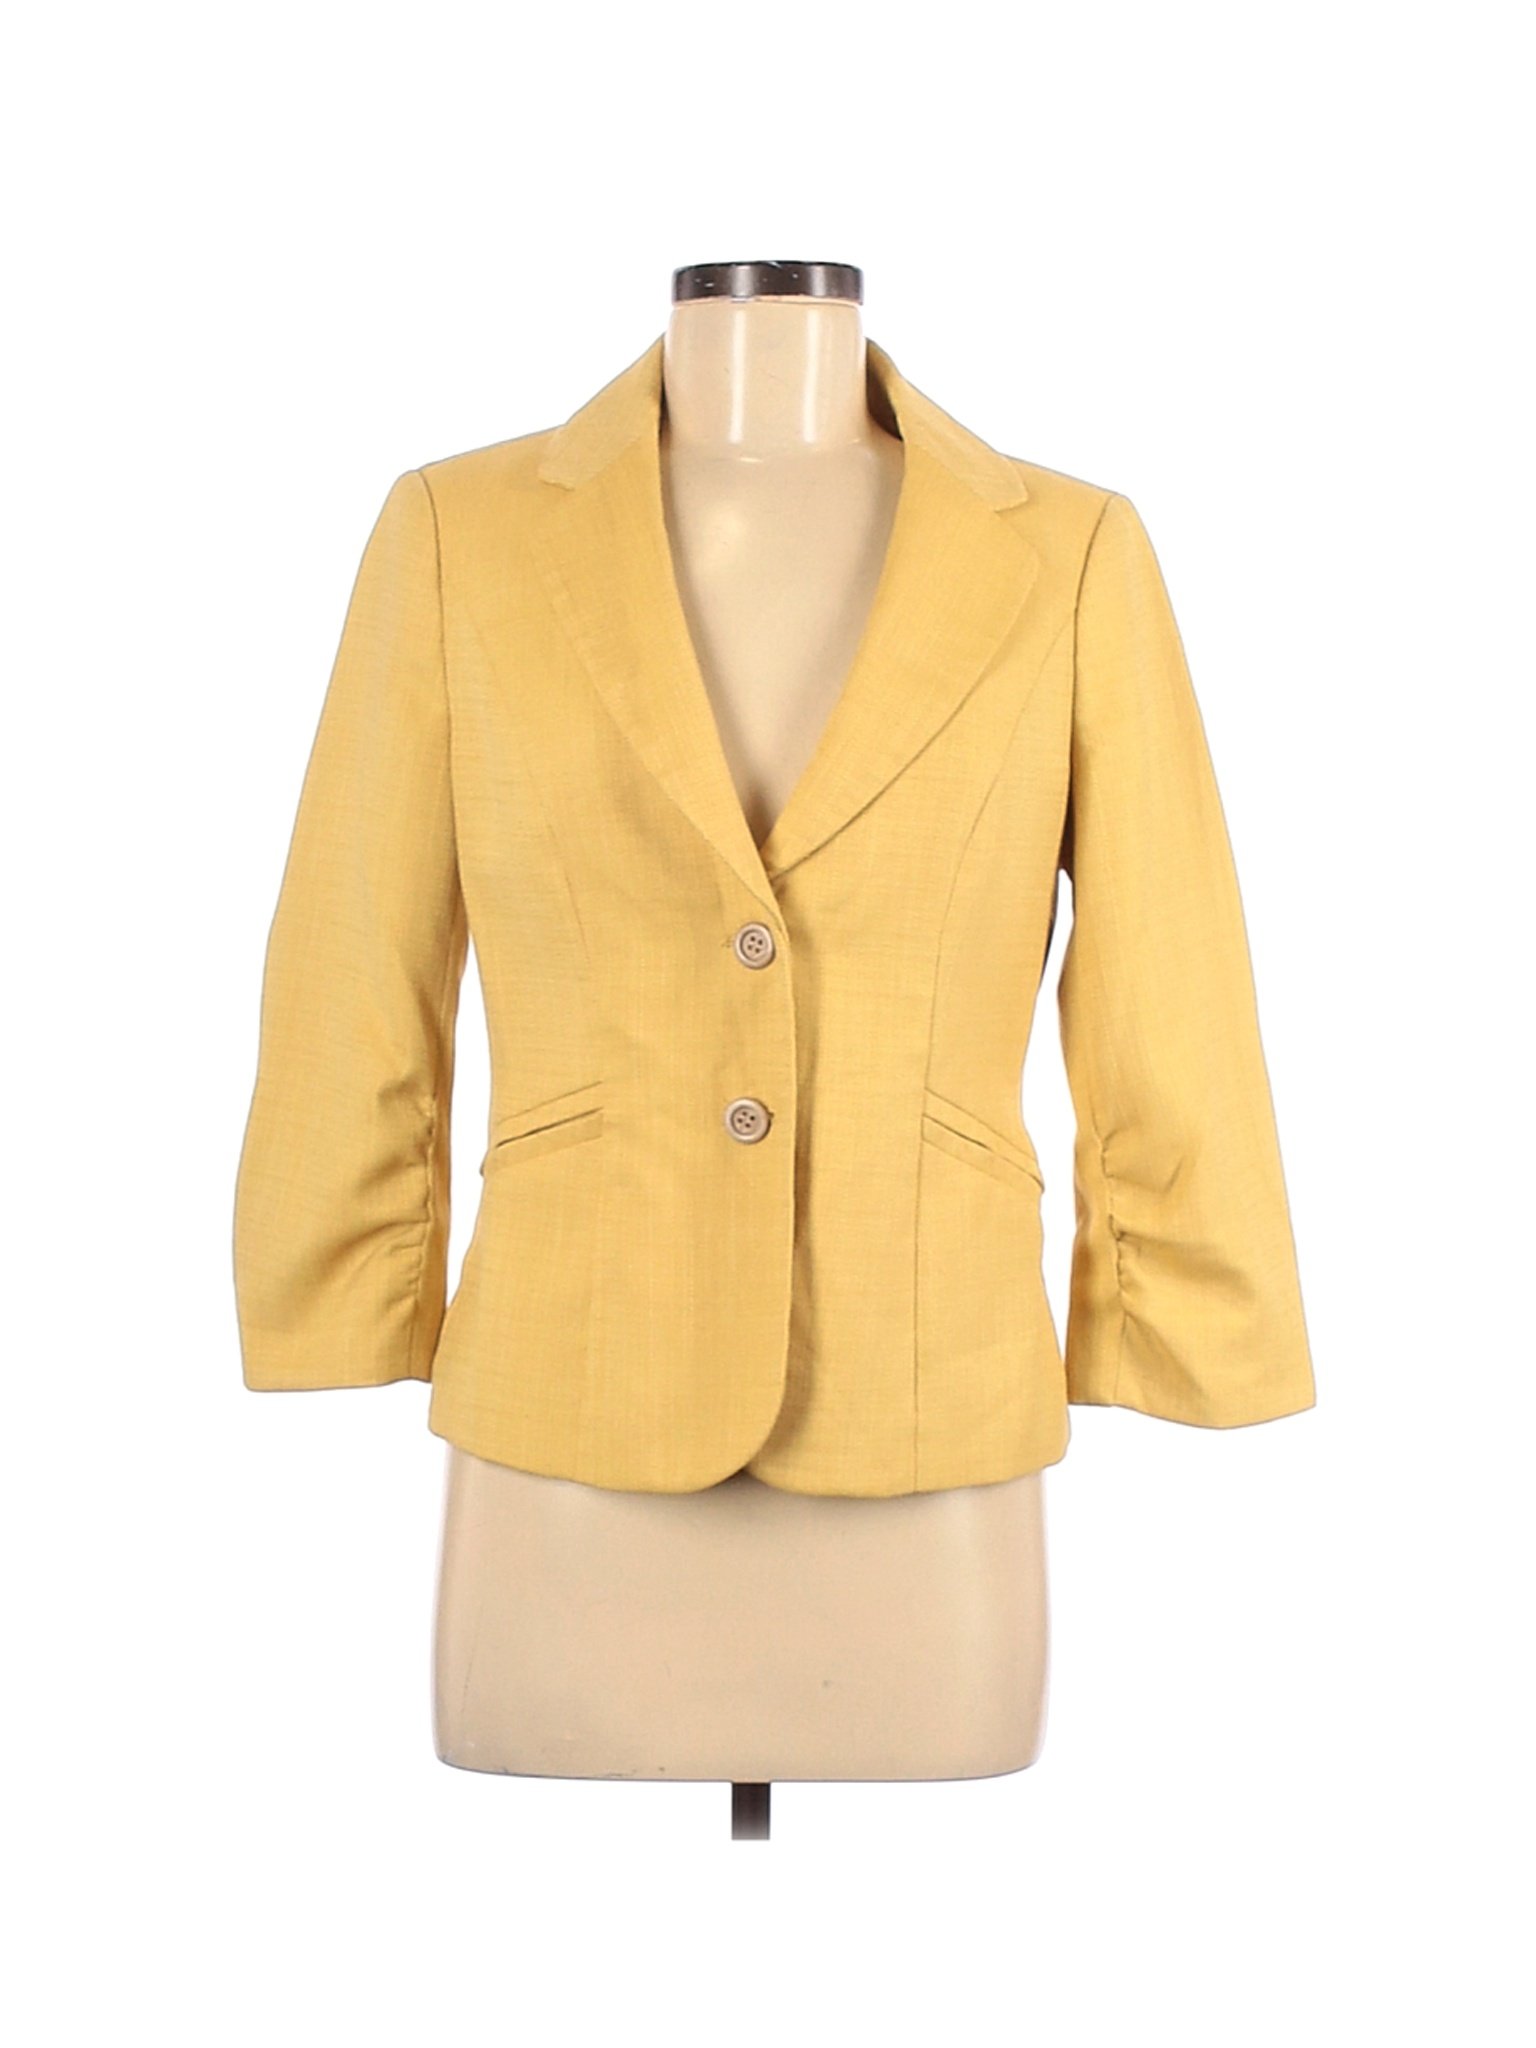 The Limited Women Yellow Blazer 8 | eBay